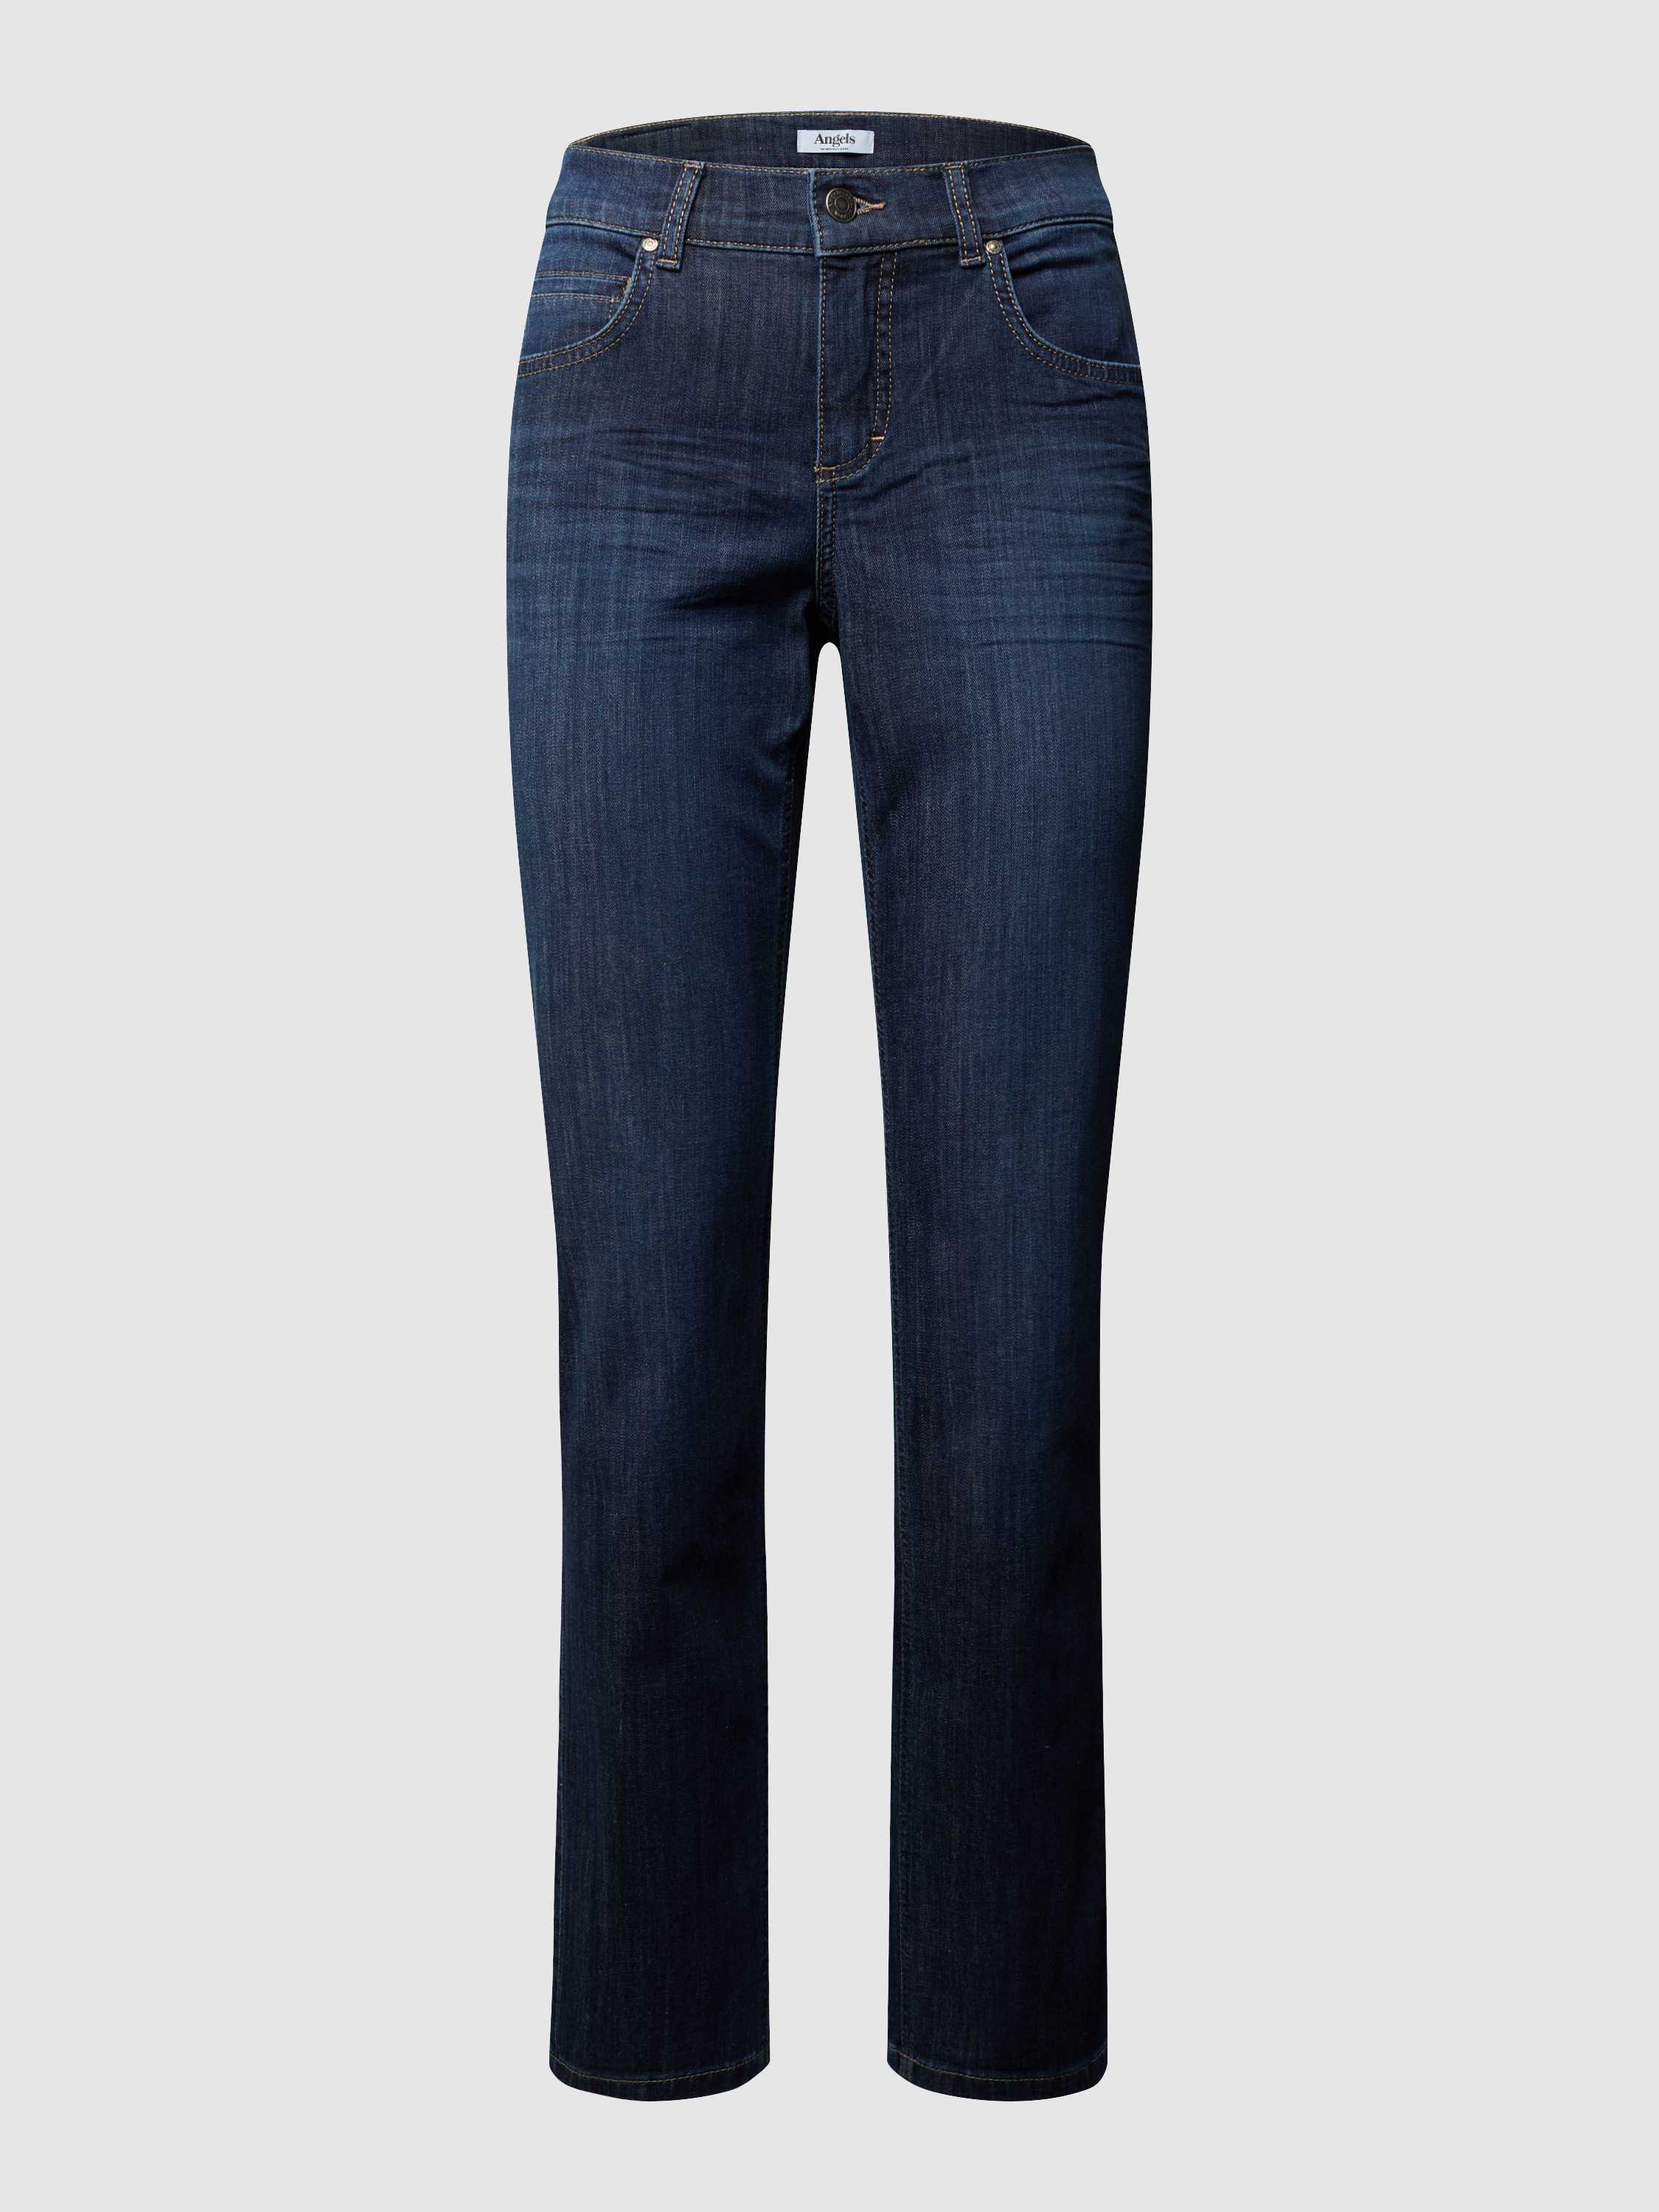 Regular Fit Jeans mit Label-Patch Modell 'CICI 34' Modell CICI